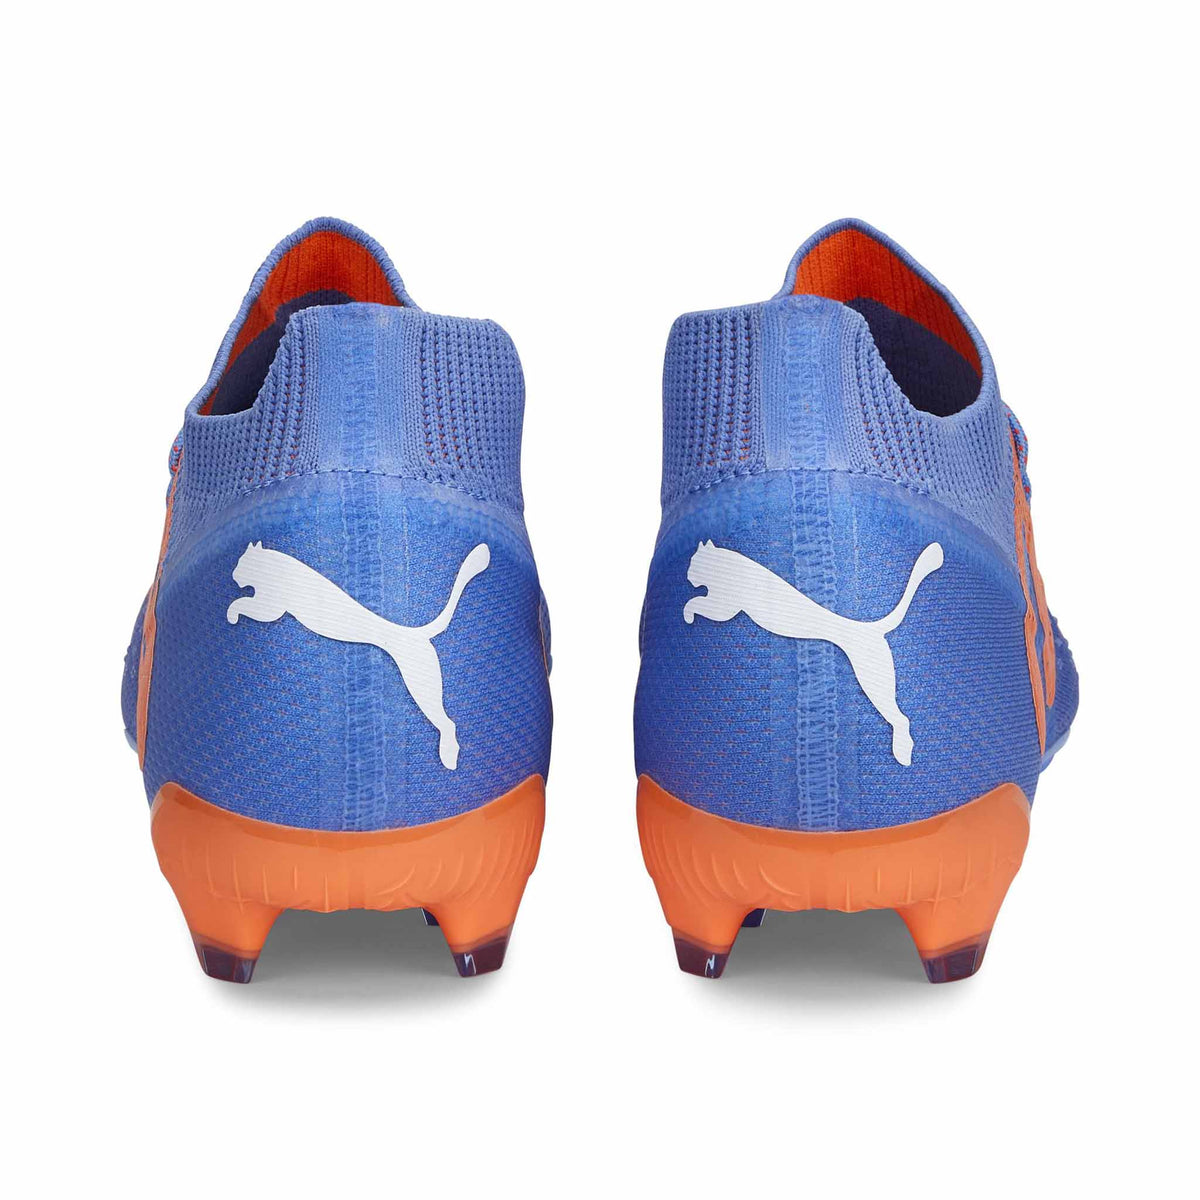 Puma Future Ultimate FG/AG chaussures de soccer a crampons - Blue Glimmer / Puma White / Ultra Orange